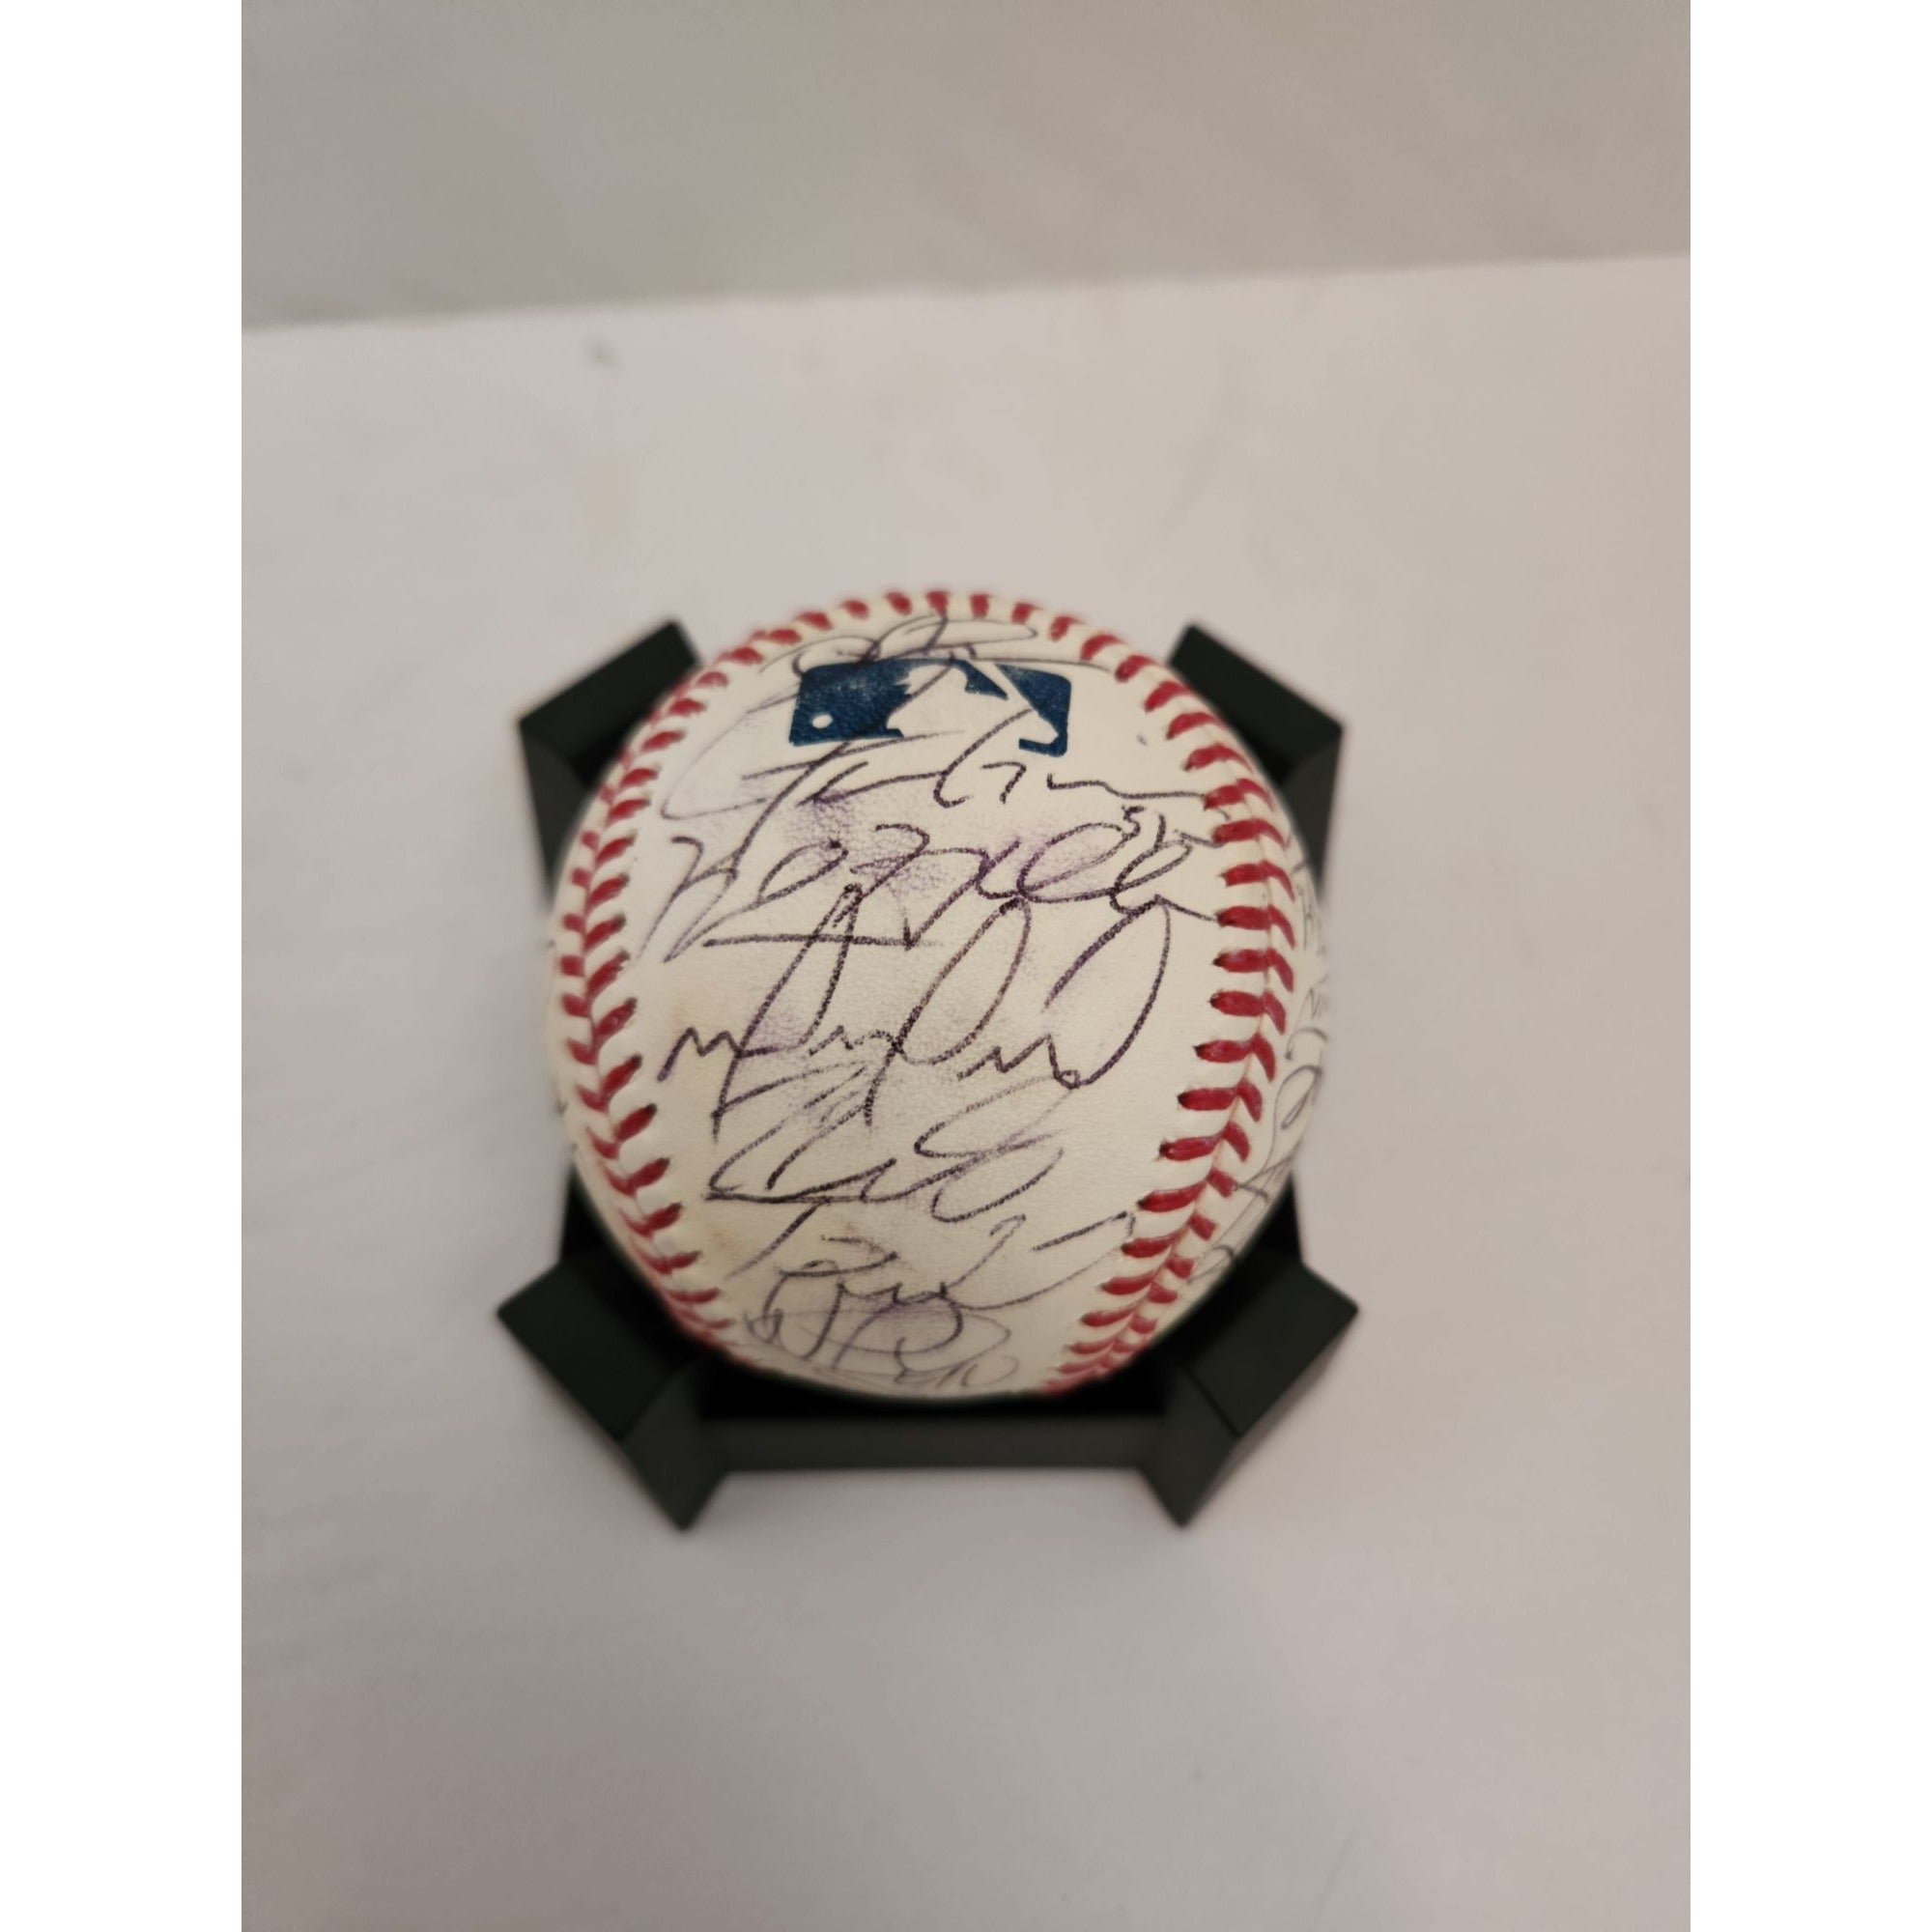 Anthony Rizzo Joe Maddon Chicago Cubs World Series champions team signed baseball